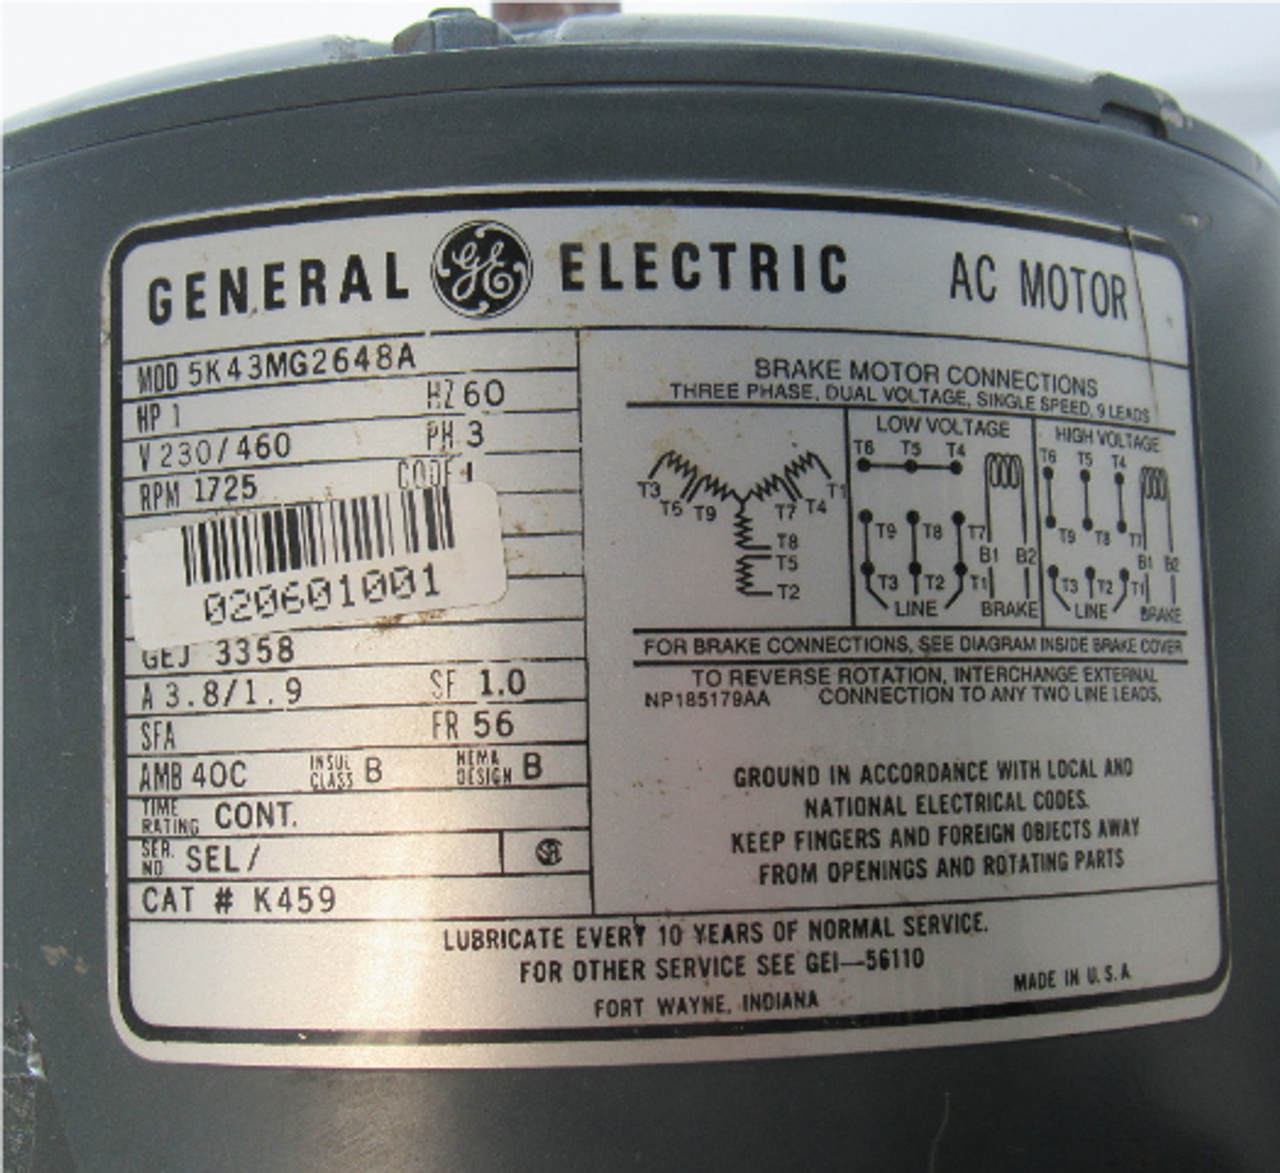 General Electric 5K43MG2648A AC Motor w/ Stearns 1-055-511-00-BQF Disc Brake, 3-Phase, 1Hp, 230/460V, 1725 RPM, 3.8/1.9 A